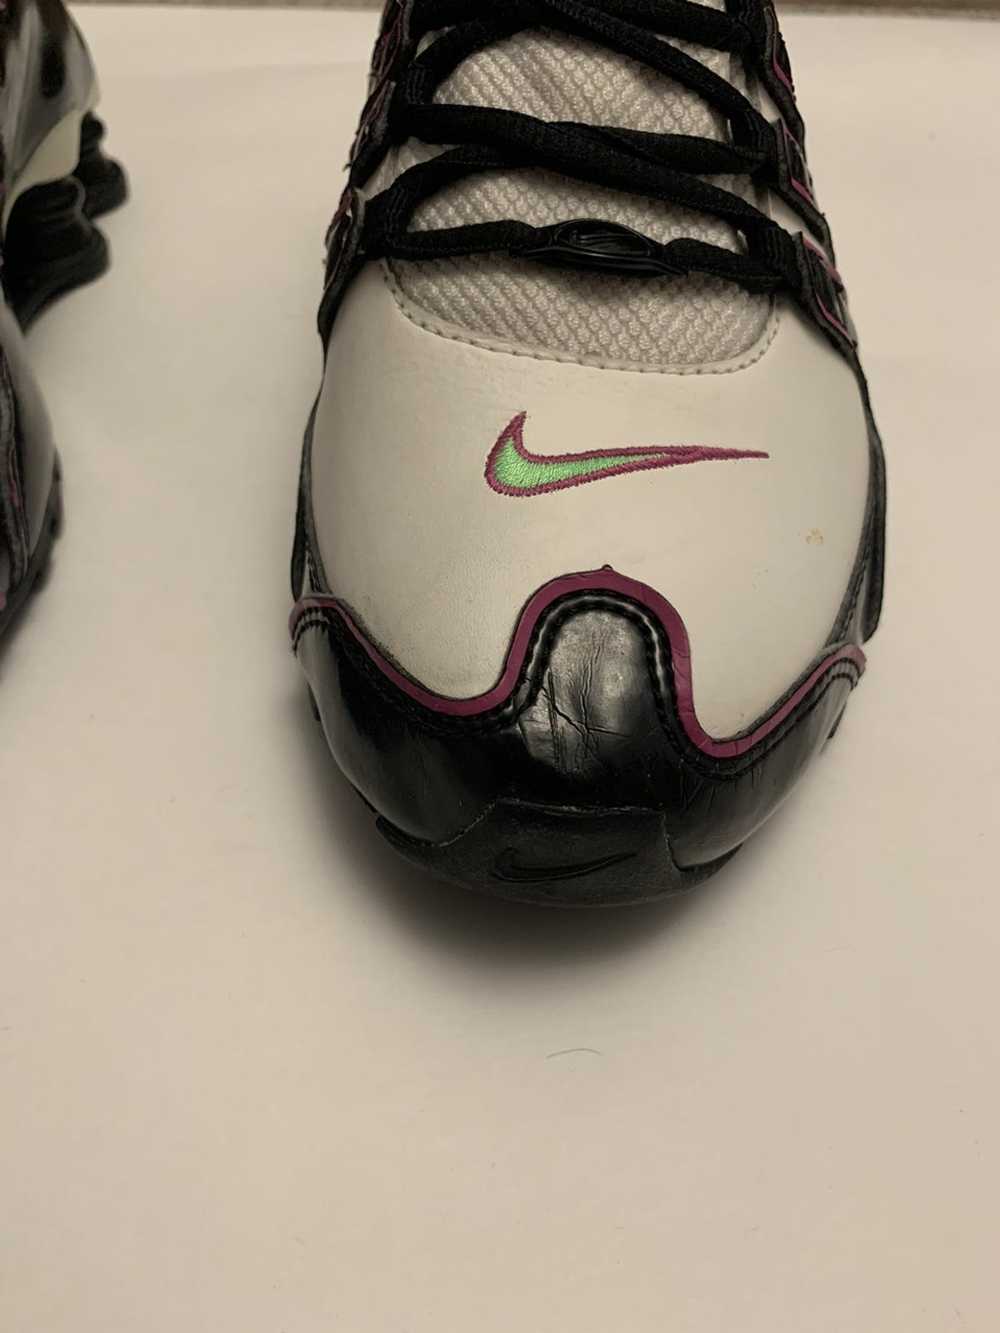 Nike Nike shox 2007 rare colorway - image 6